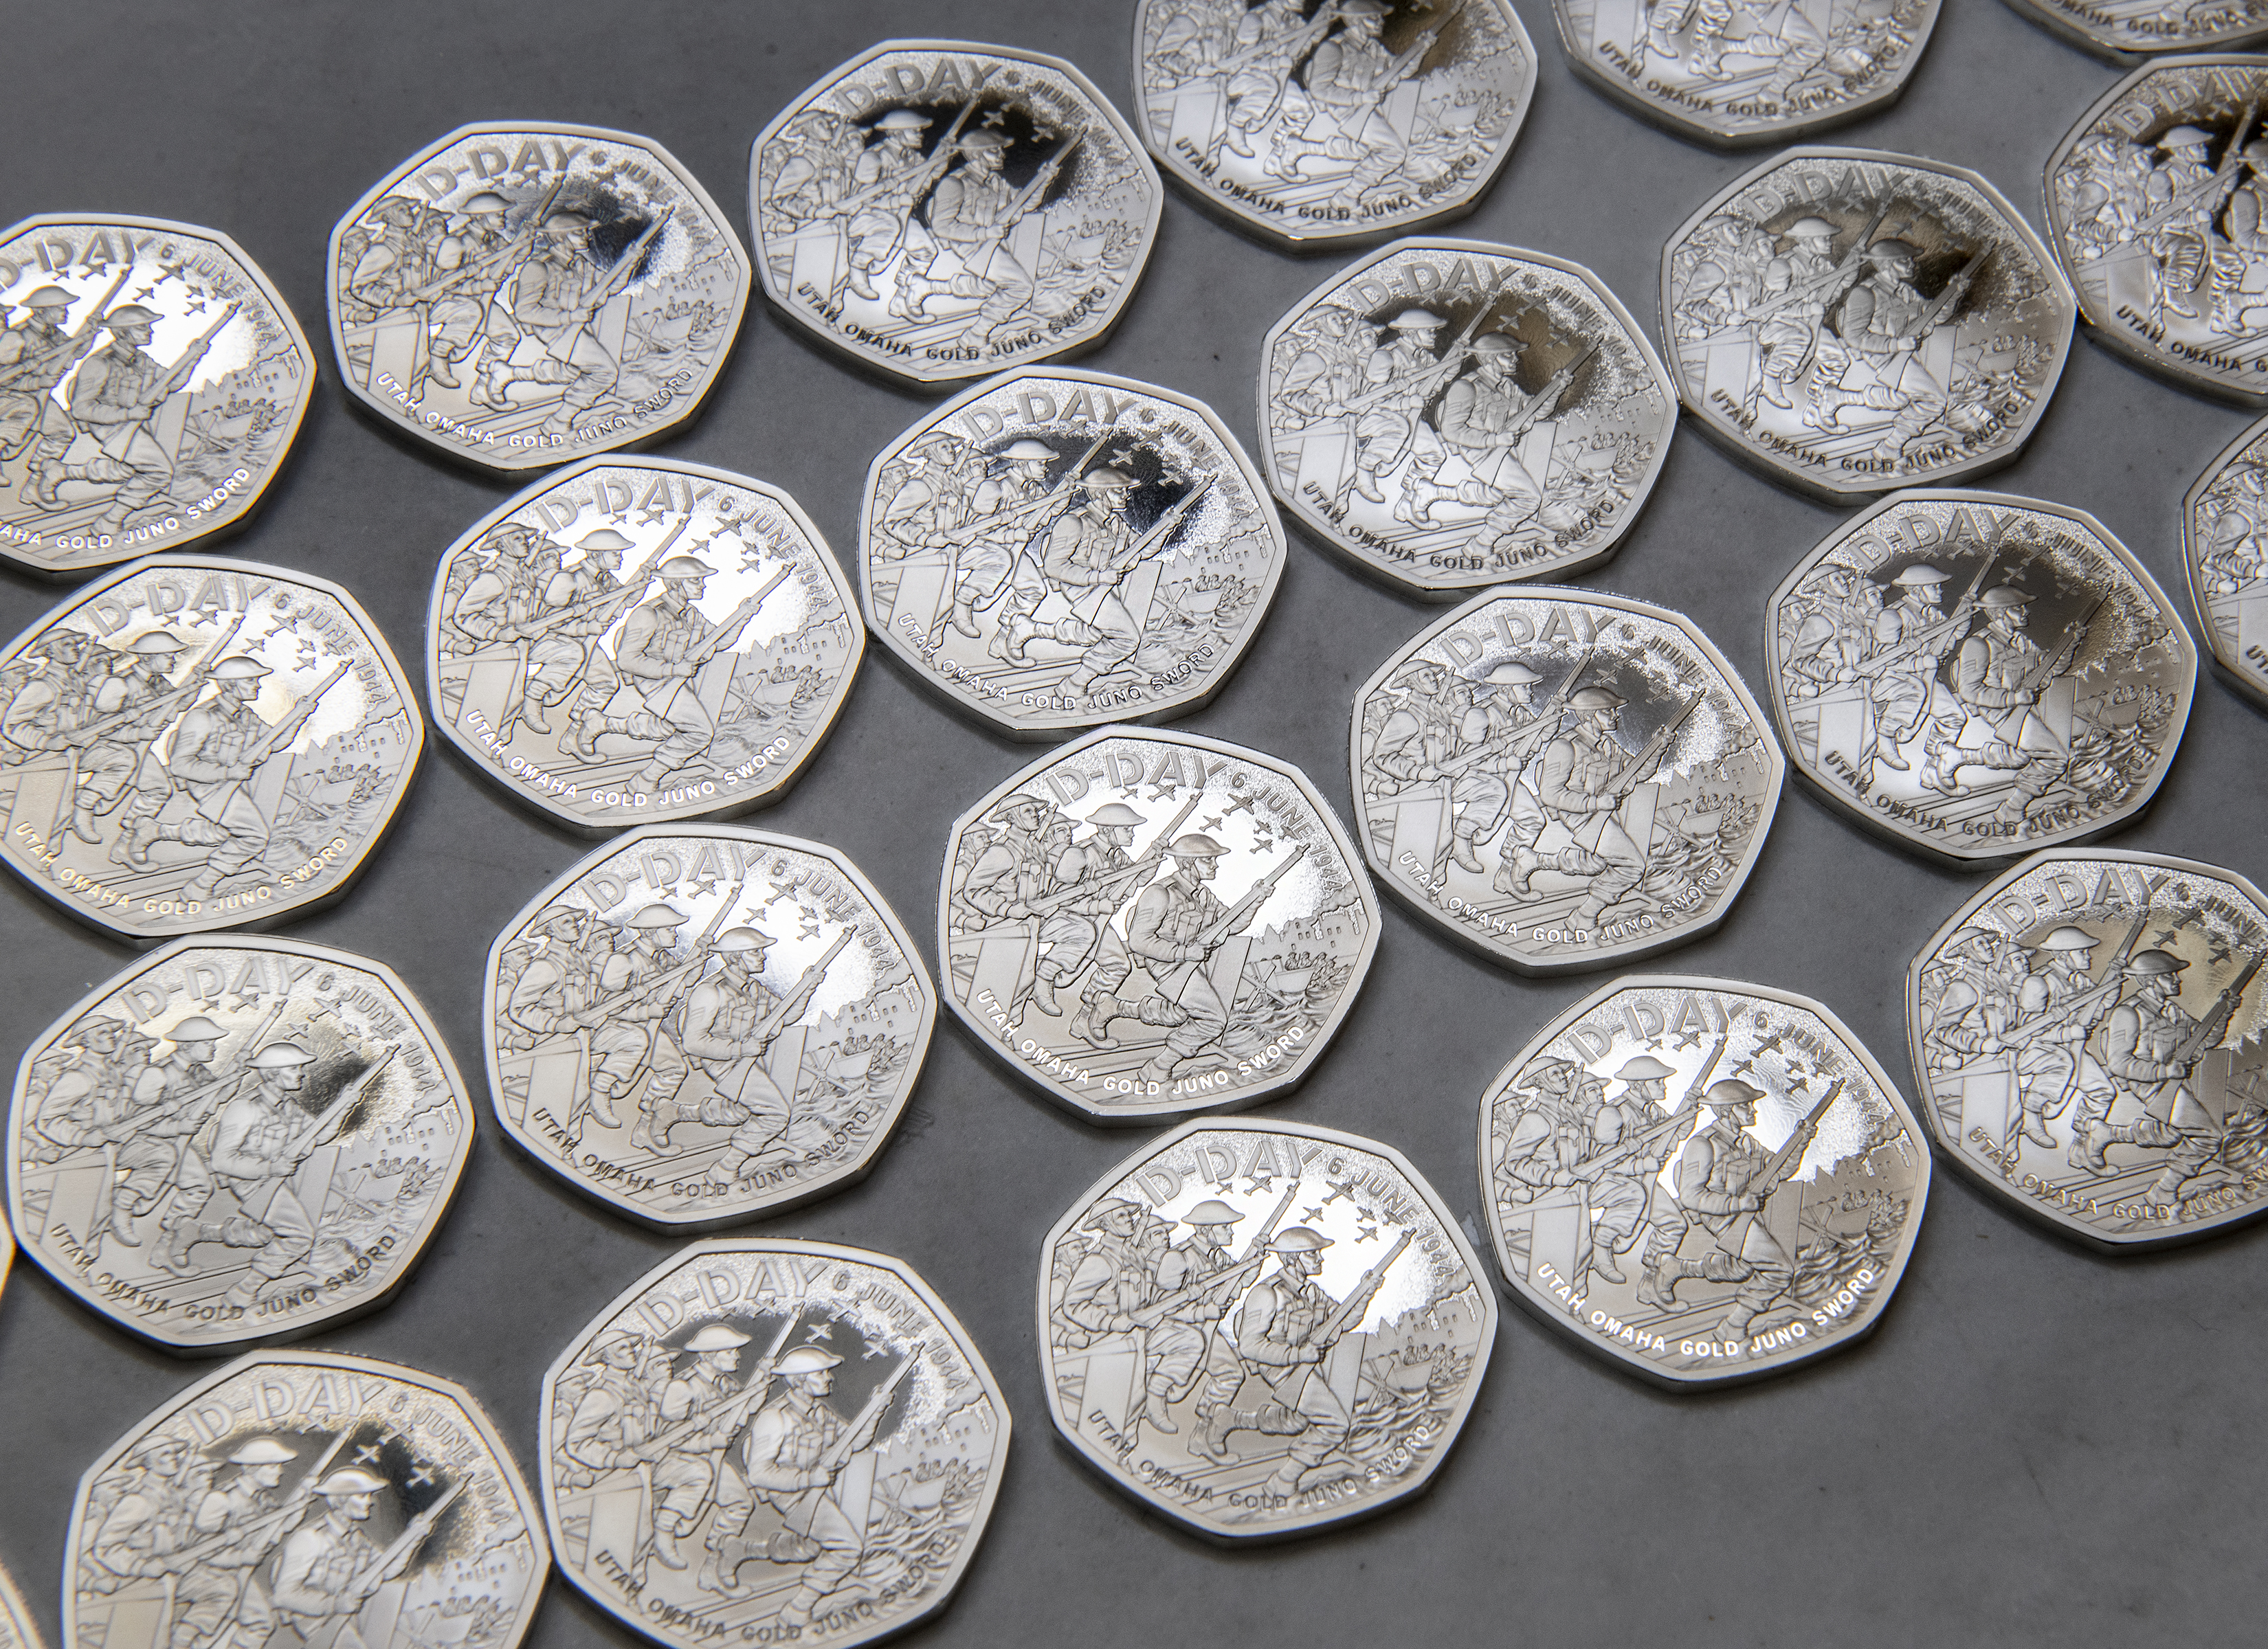 Royal Mint coins